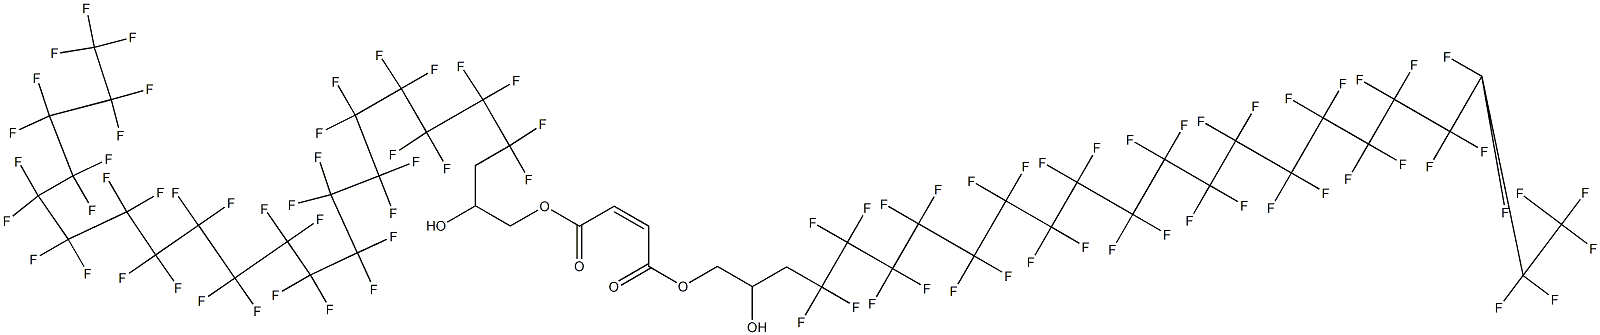 Maleic acid bis(4,4,5,5,6,6,7,7,8,8,9,9,10,10,11,11,12,12,13,13,14,14,15,15,16,16,17,17,18,18,19,19,20,20,21,21,22,22,23,23,23-hentetracontafluoro-2-hydroxytricosyl) ester|